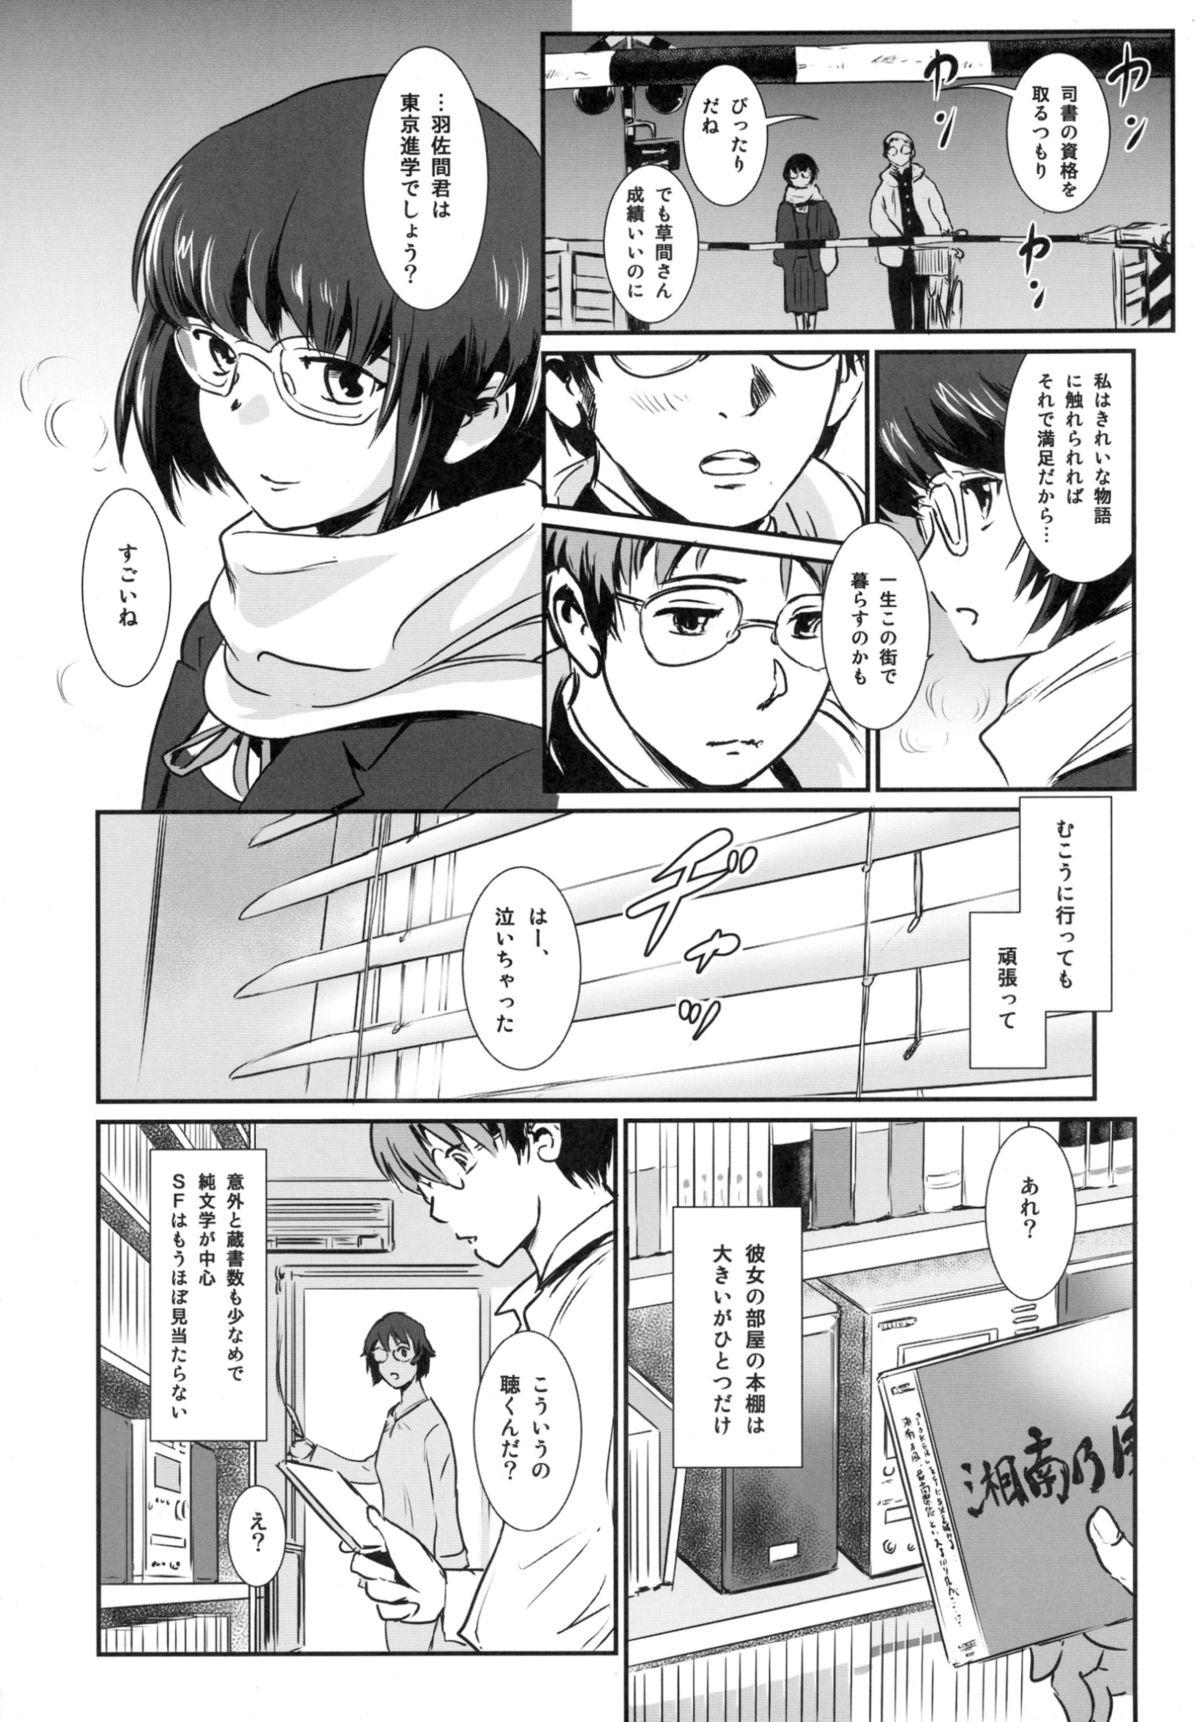 Story of the 'N' Situation - Situation#3 Mukashi no Otoko 11